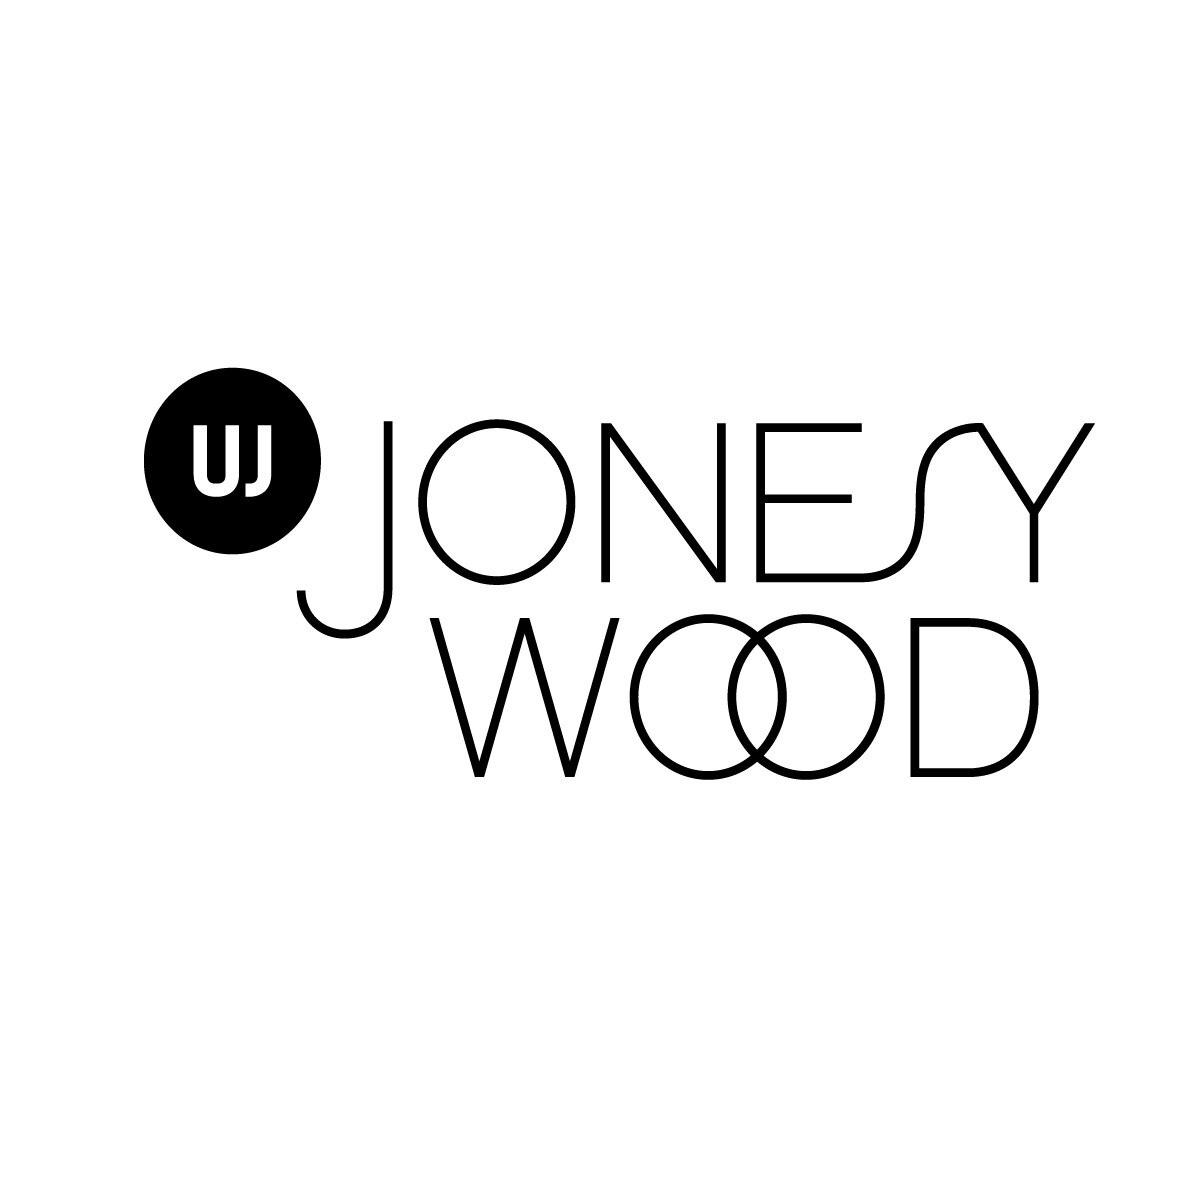 JONSEY WOOD LOGO.jpg